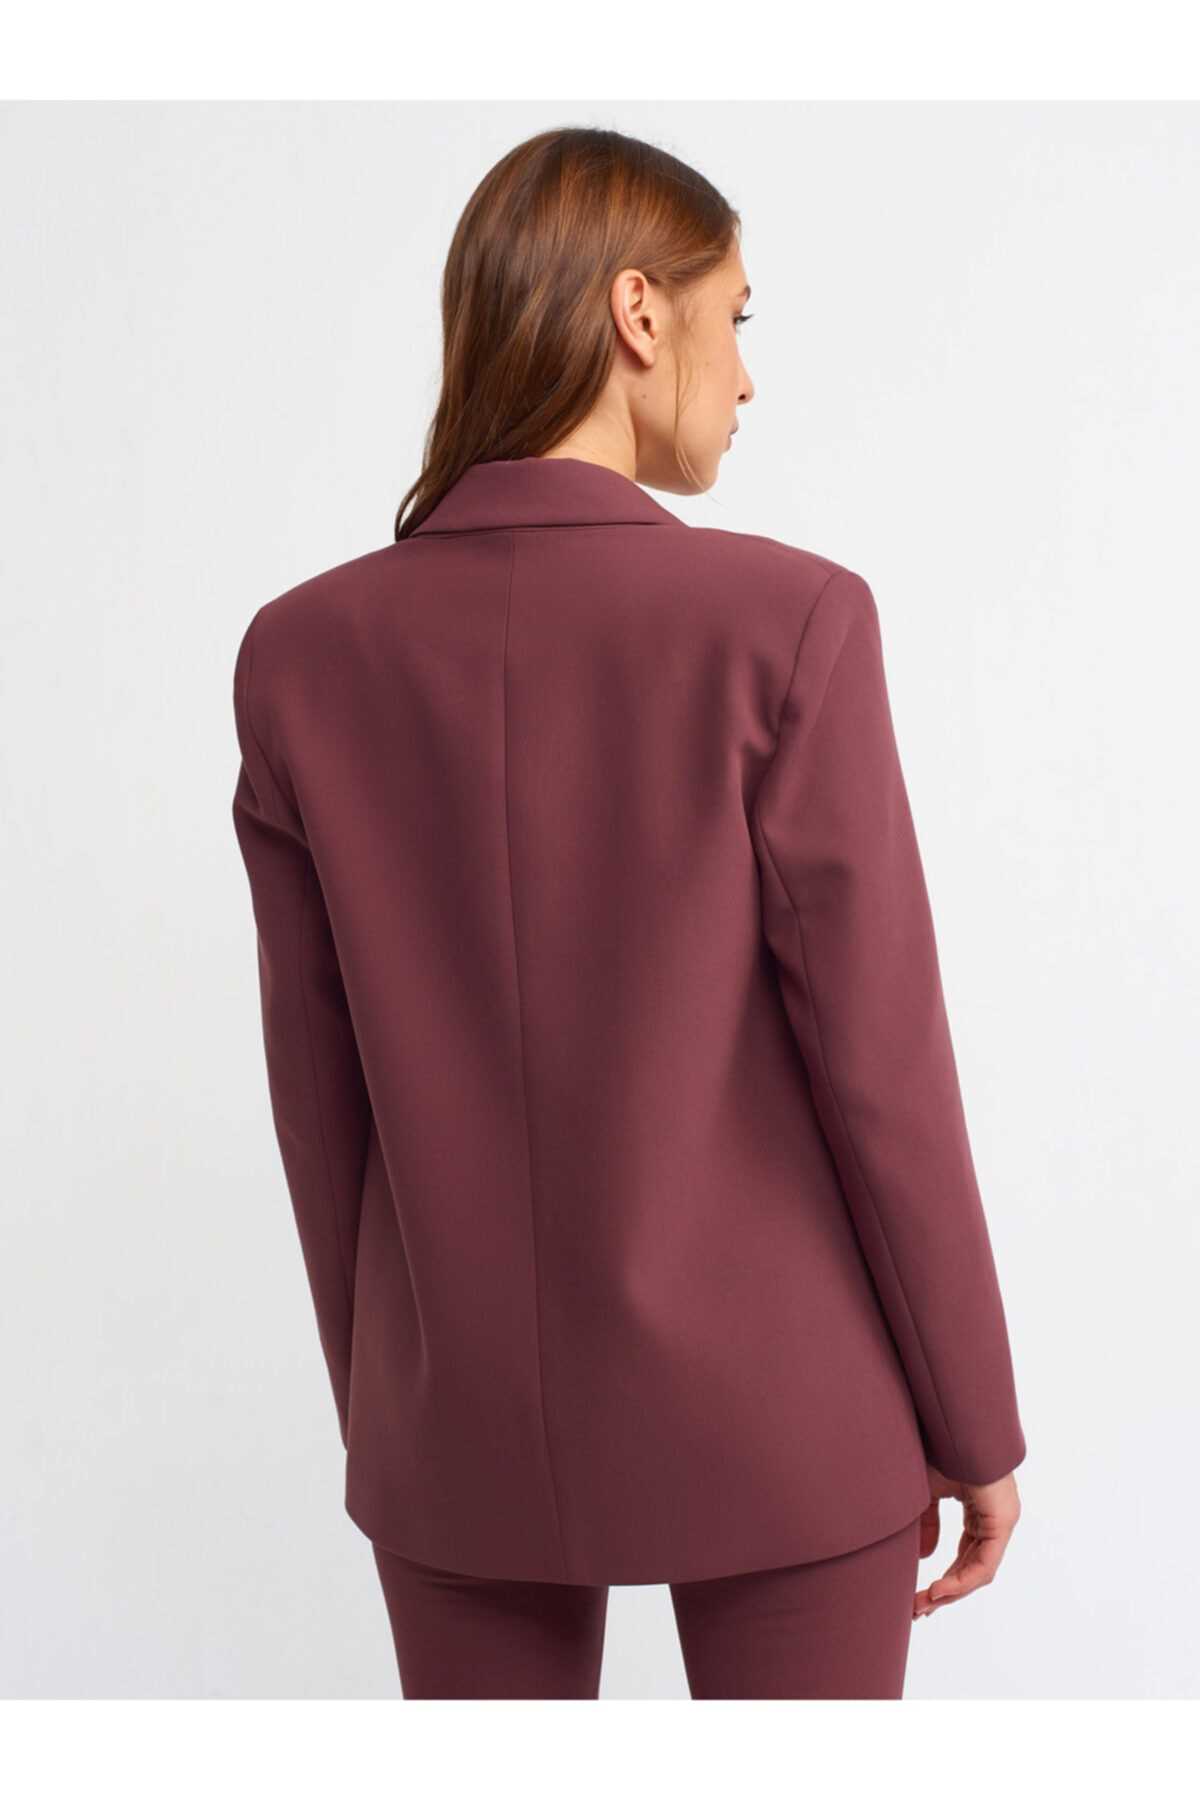 فروش انلاین کت رسمی زنانه برند Dilvin رنگ زرشکی ty184951998